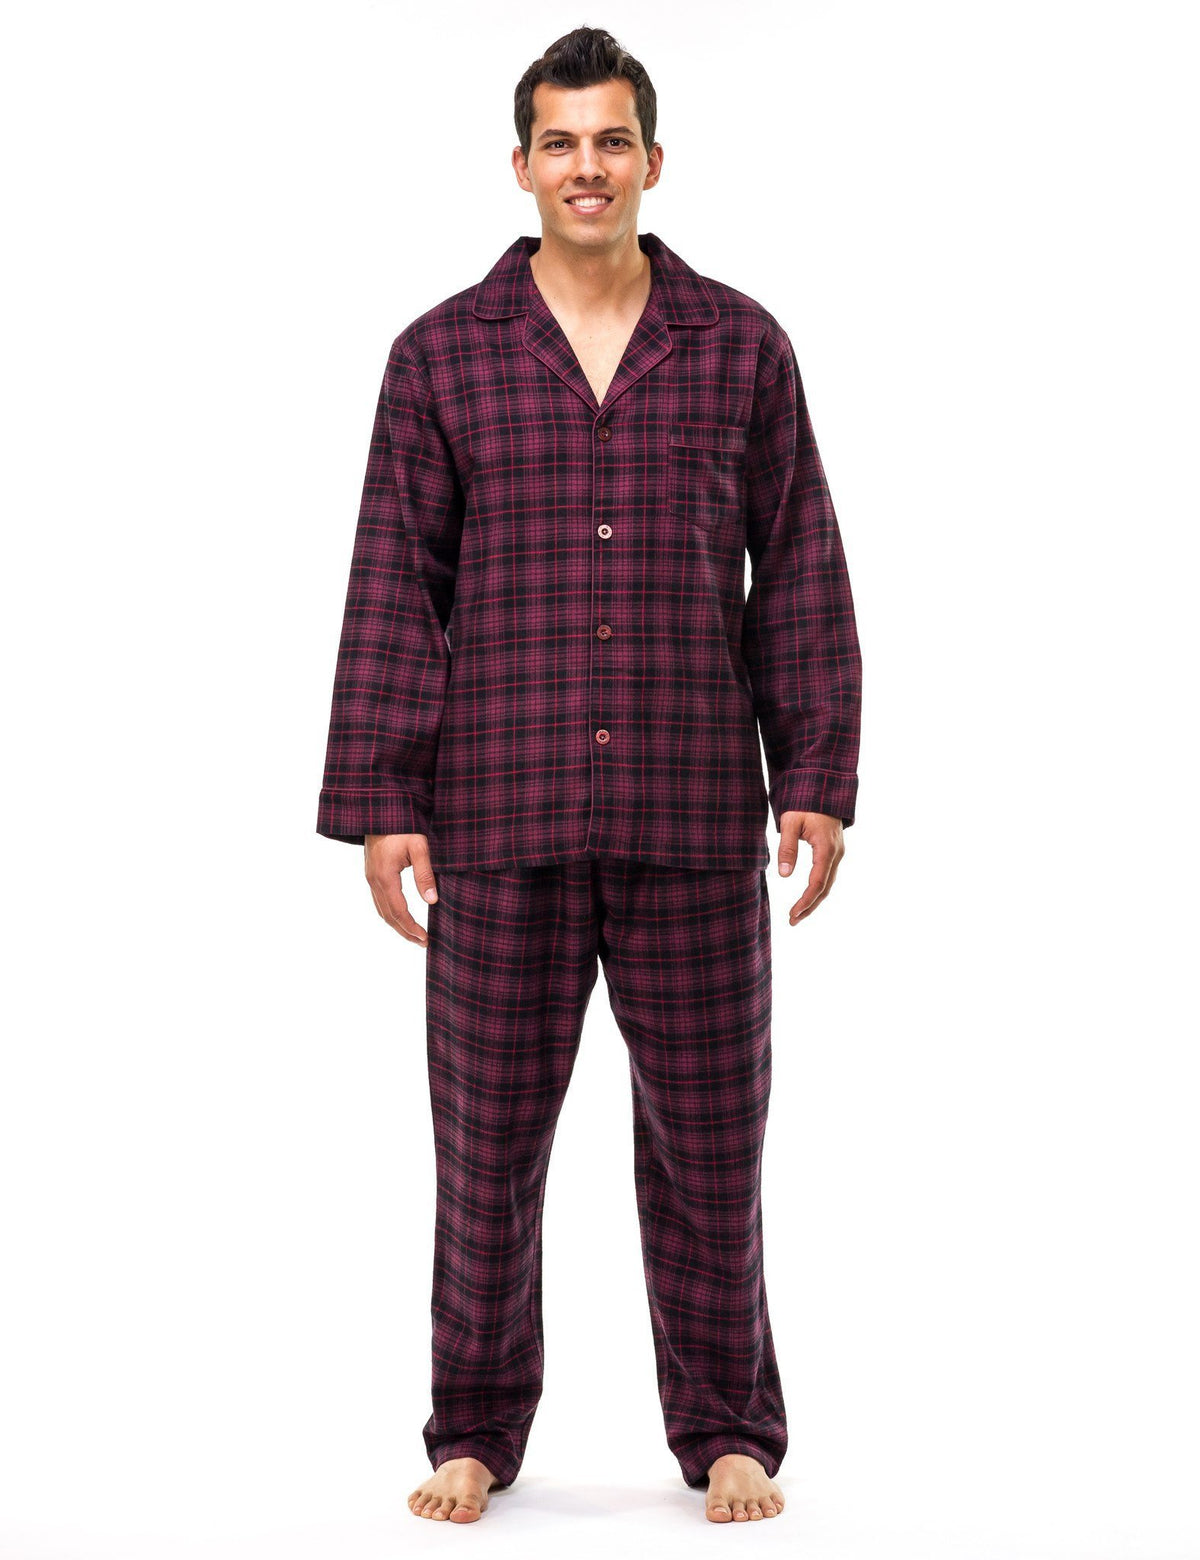 Relaxed Fit Men's Premium 100% Cotton Flannel Pajama Sleepwear Set - Black/Burgundy Plaid